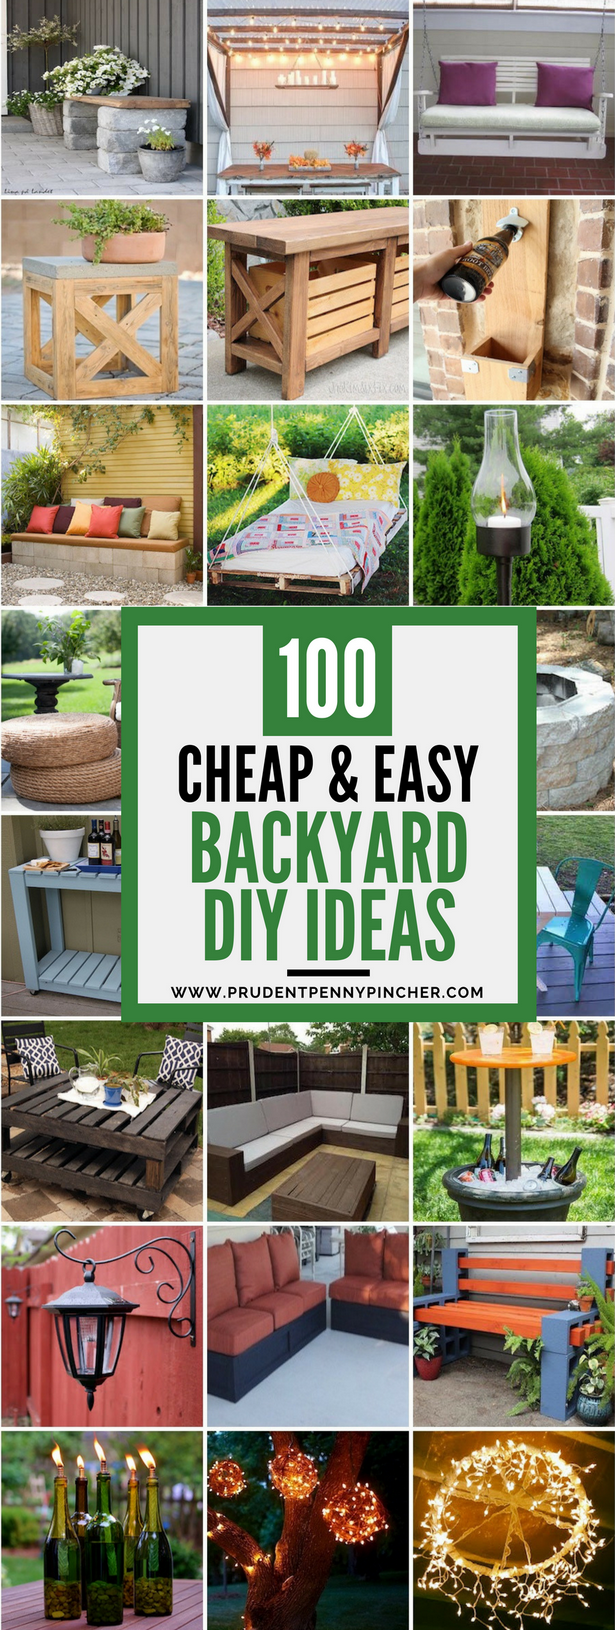 cheap-outdoor-garden-ideas-80 Евтини идеи за външна градина